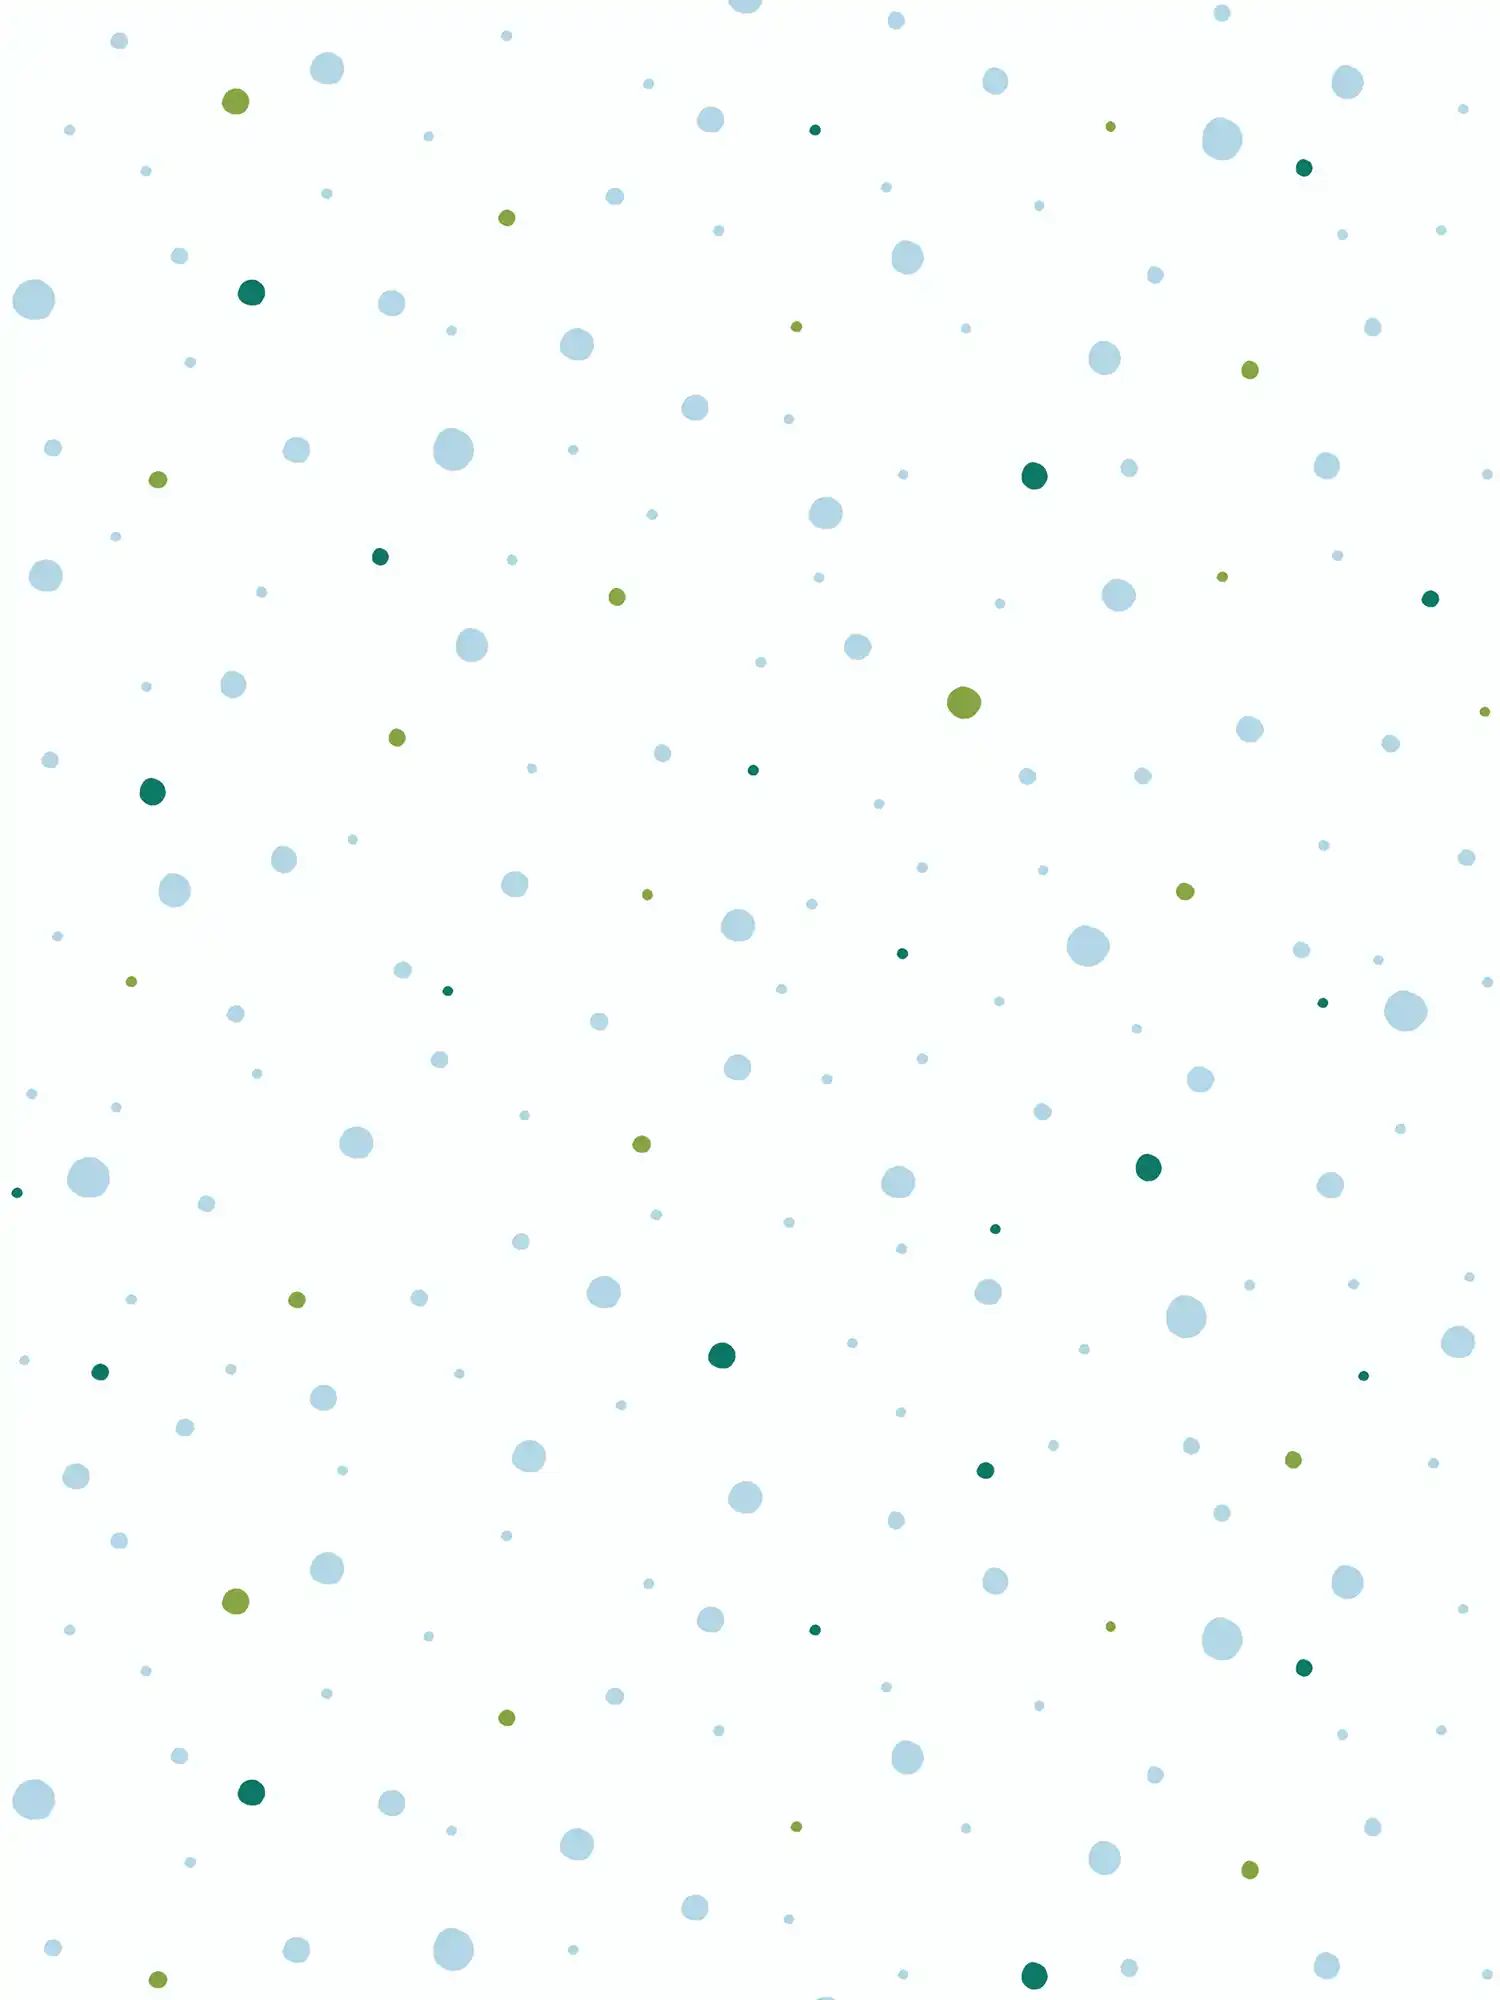         Nursery wallpaper dots - blue, white, green
    